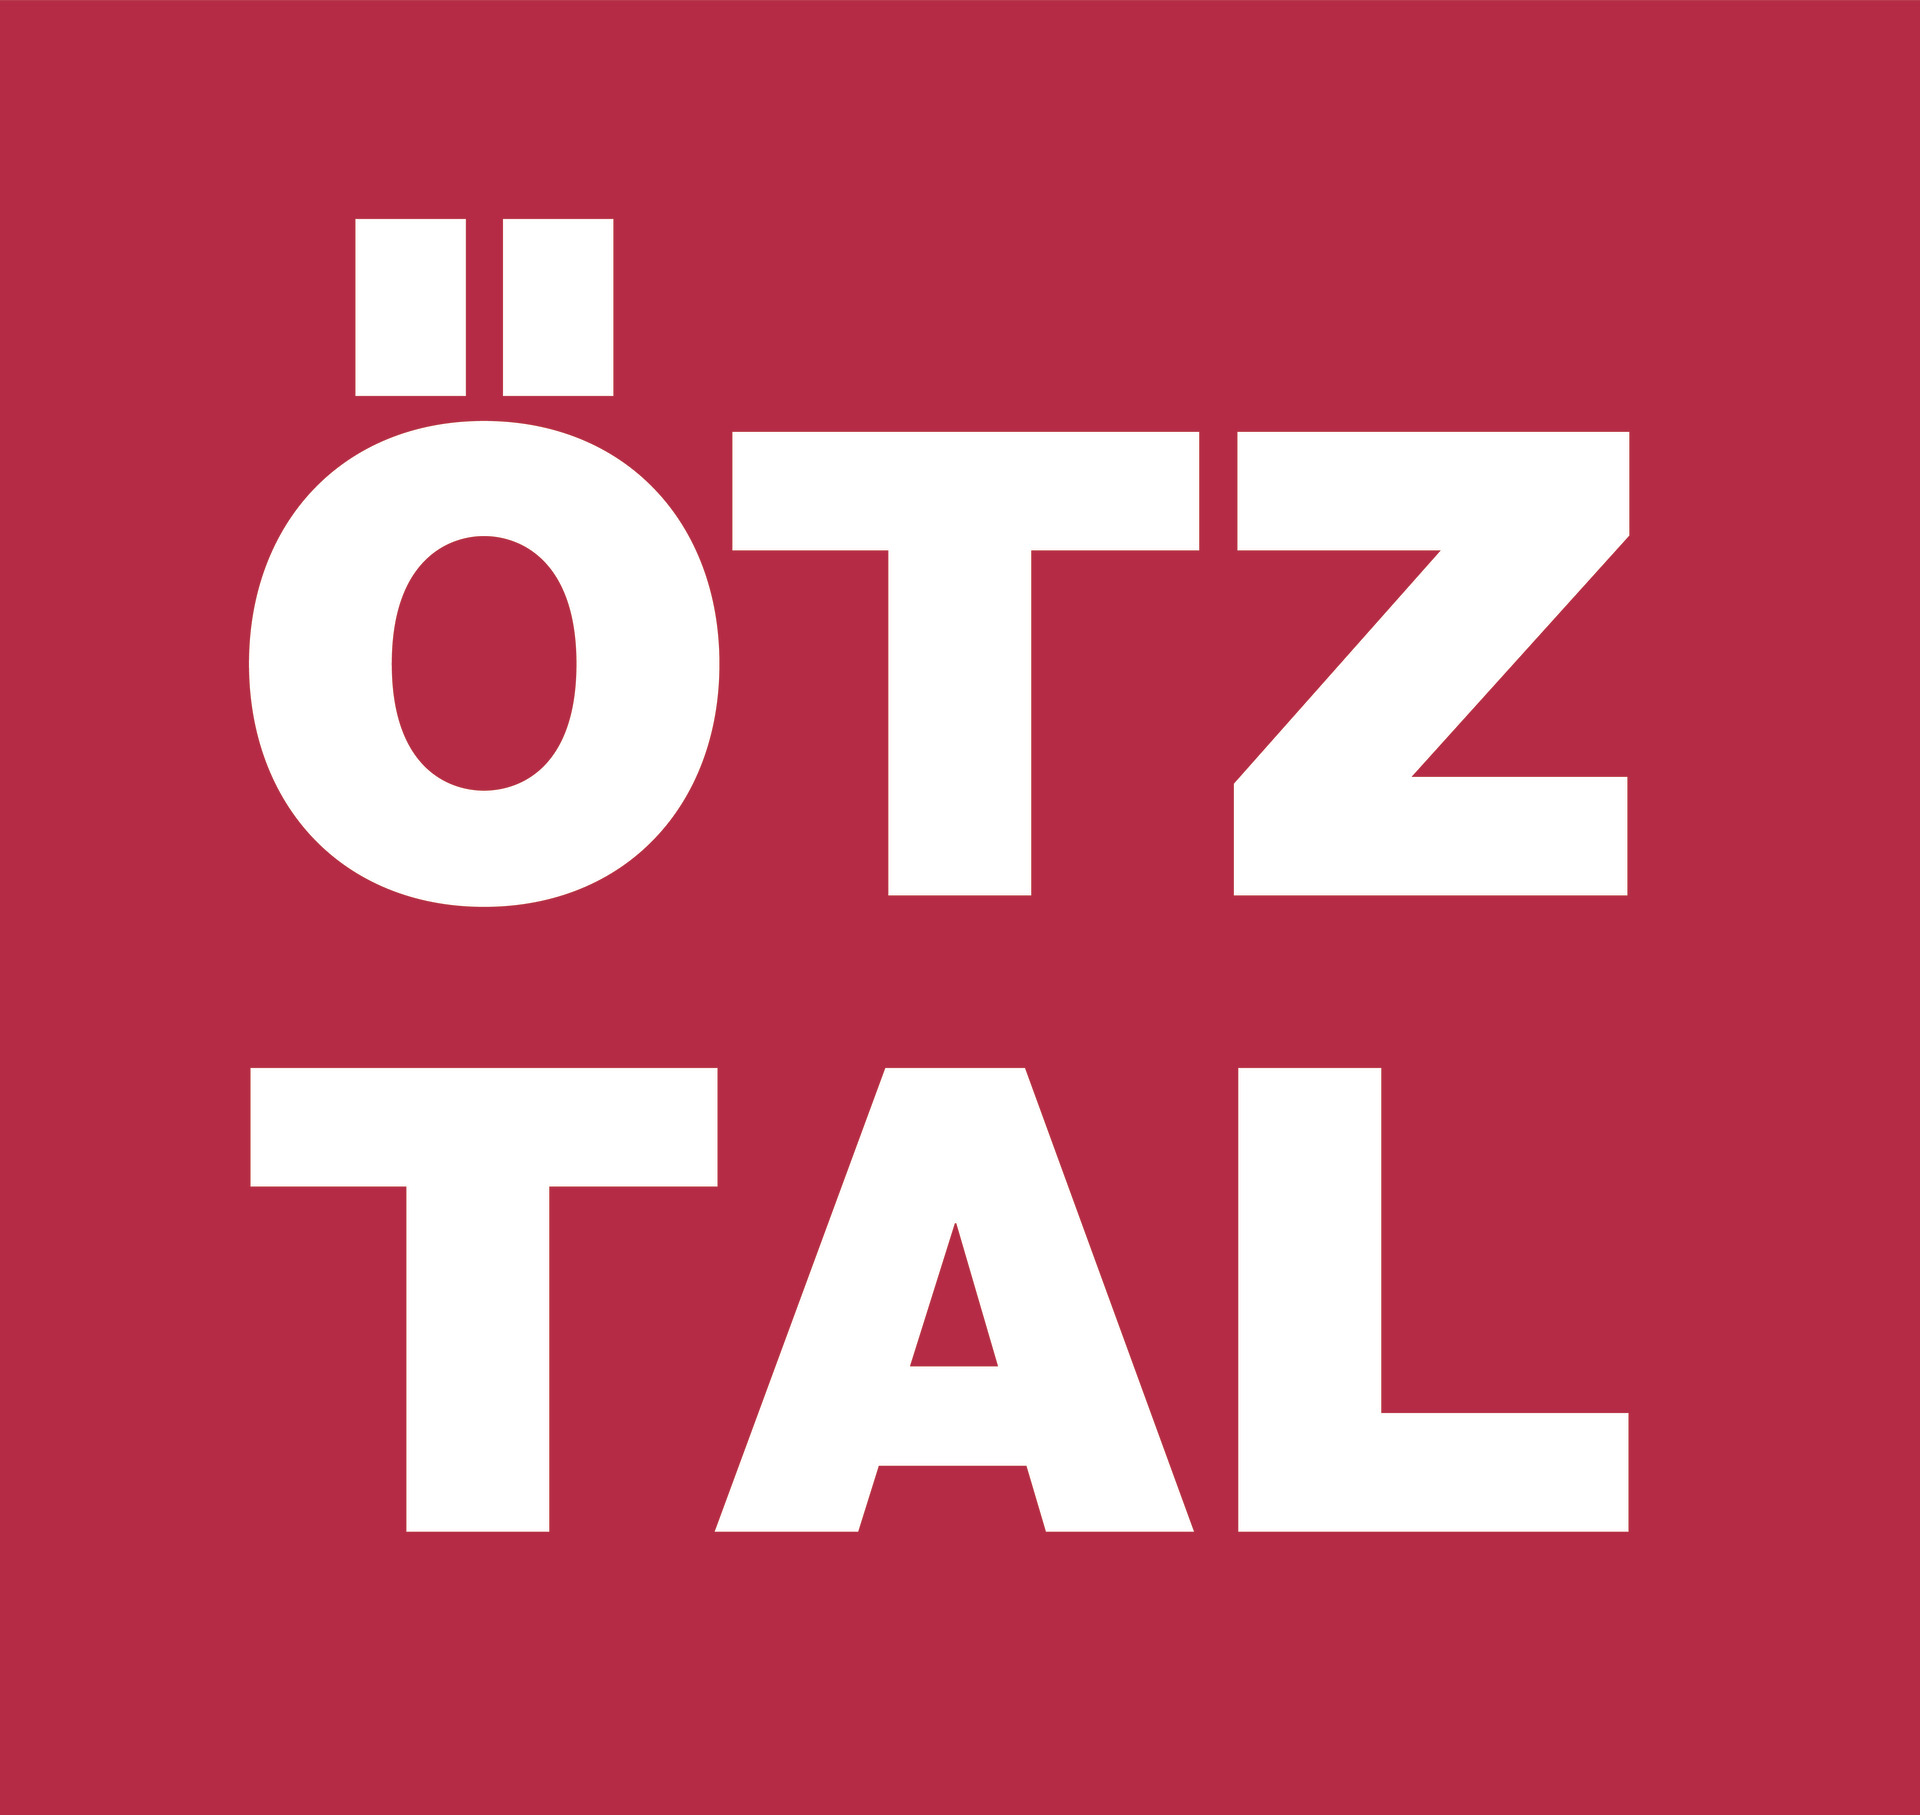 www.oetz.com